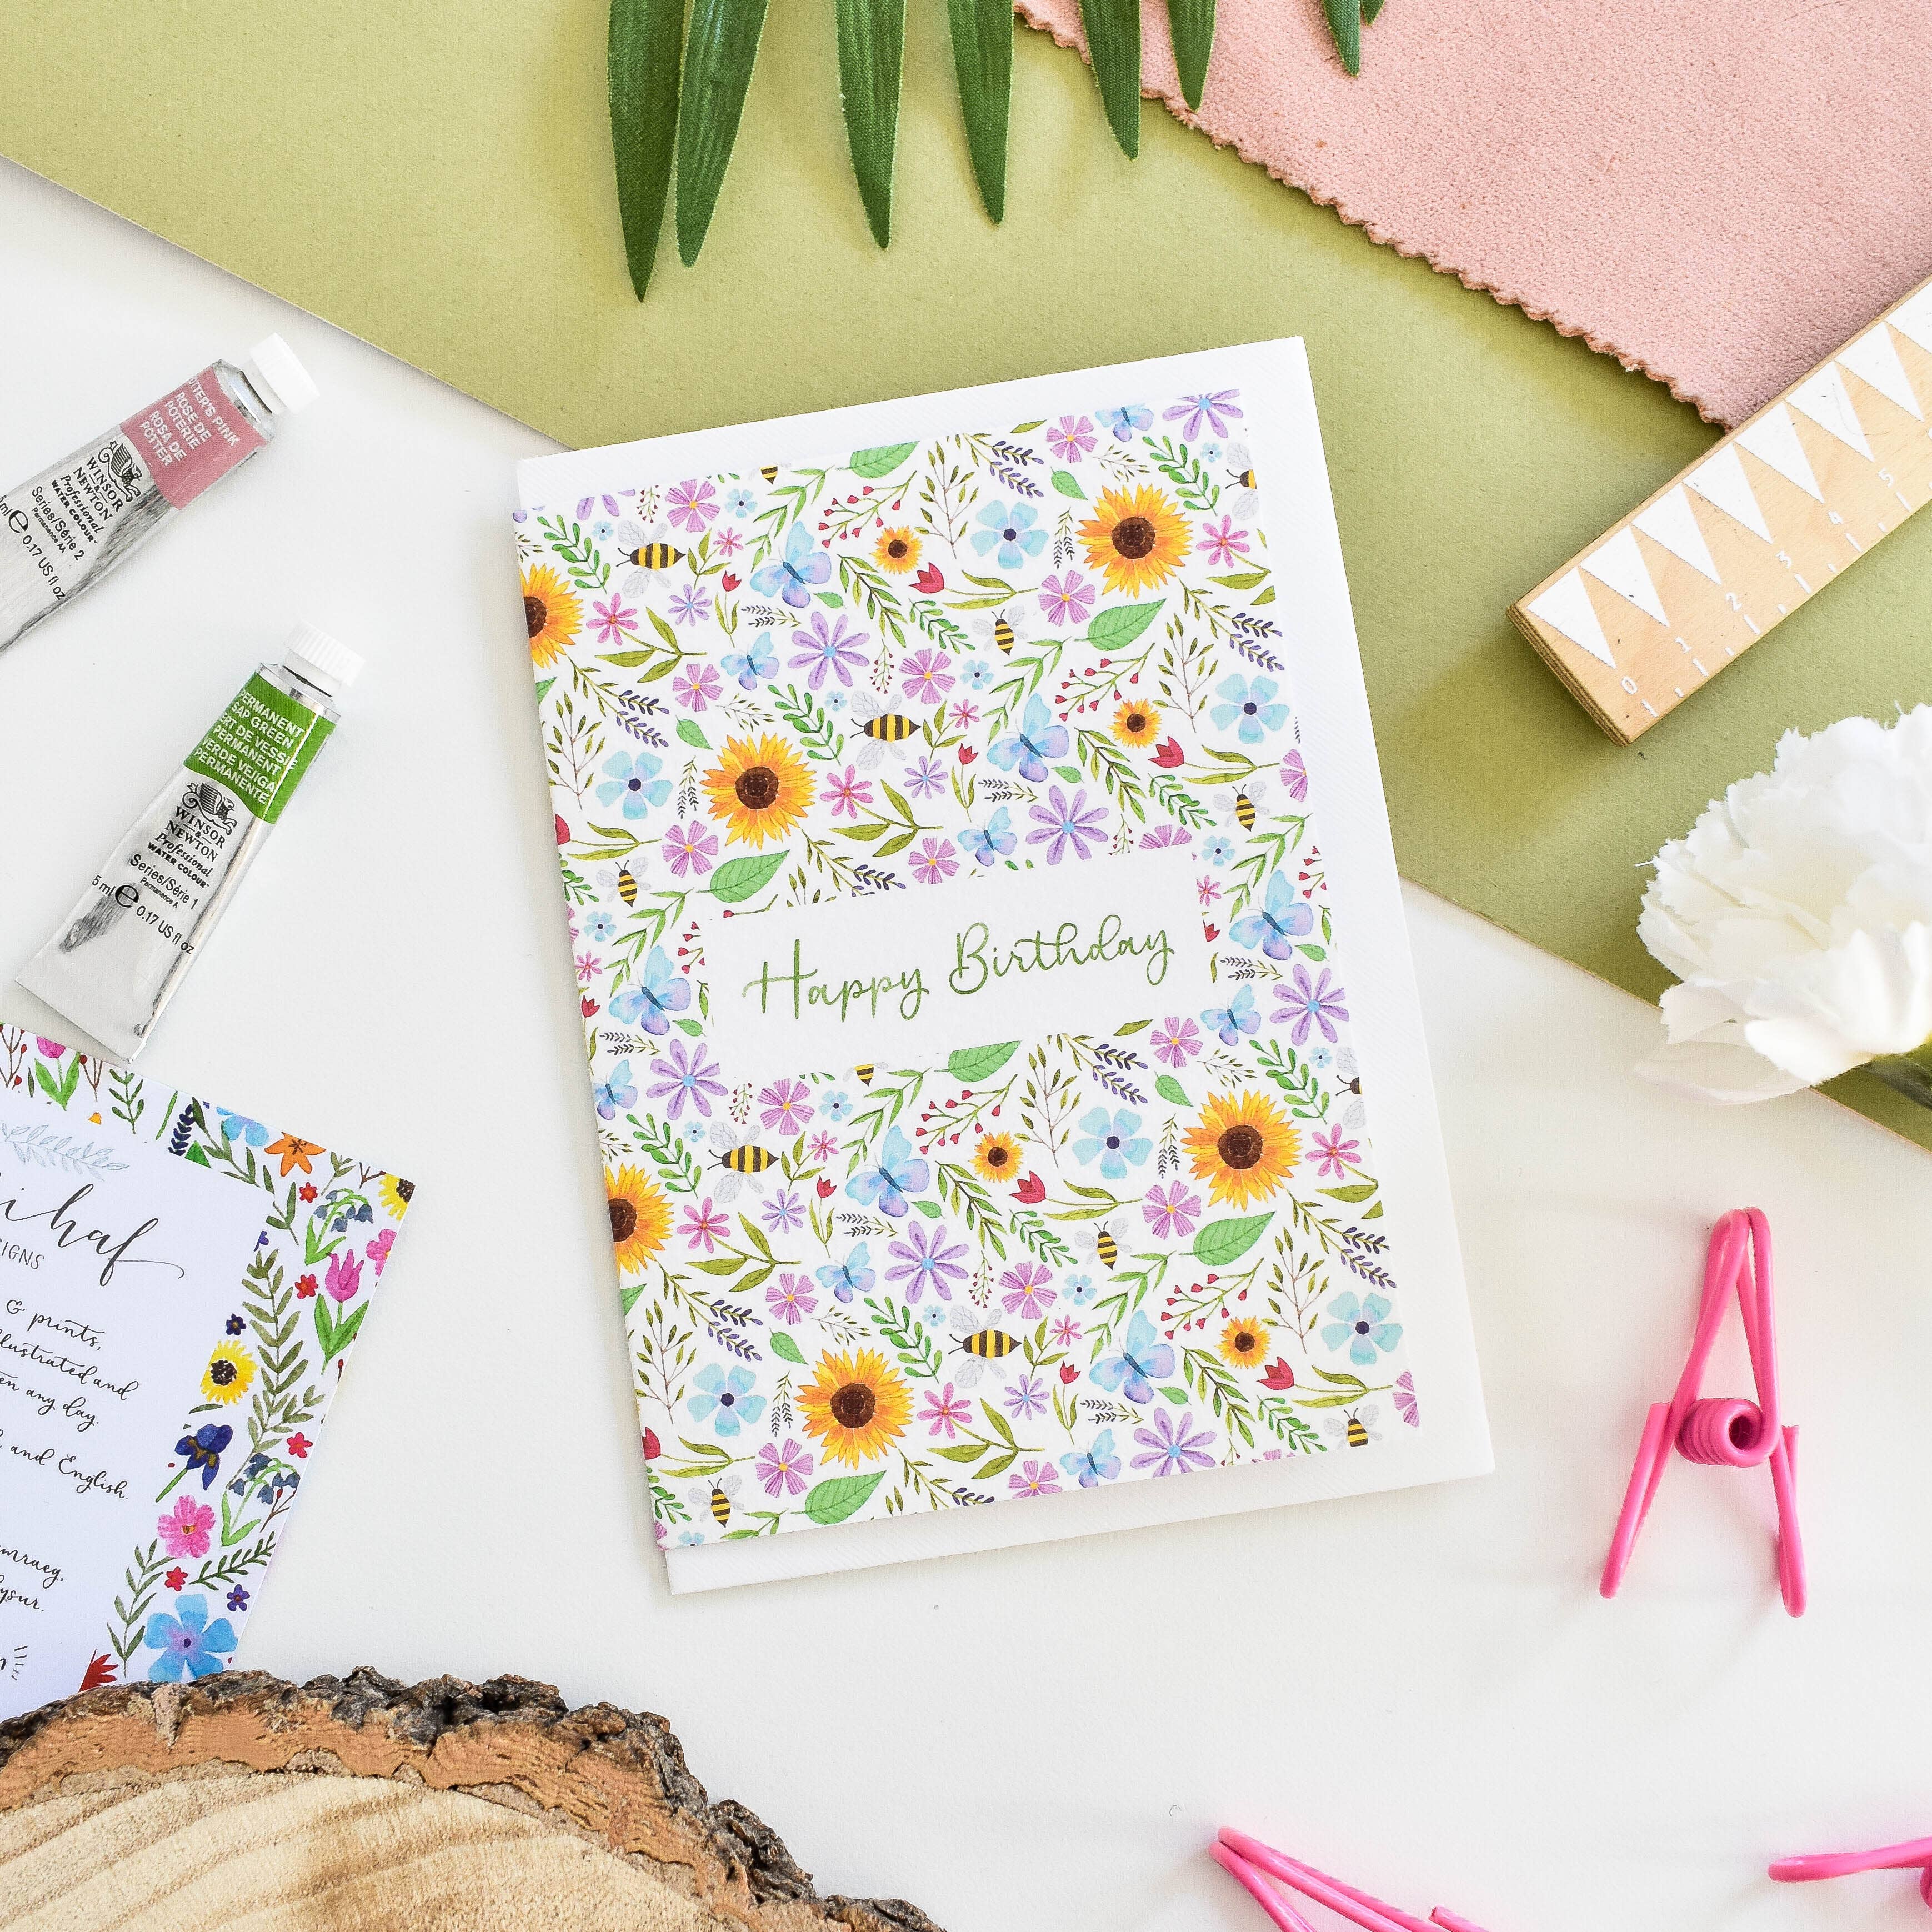 Eleri Haf Designs - Floral Sunflower Happy Birthday Greeting Card